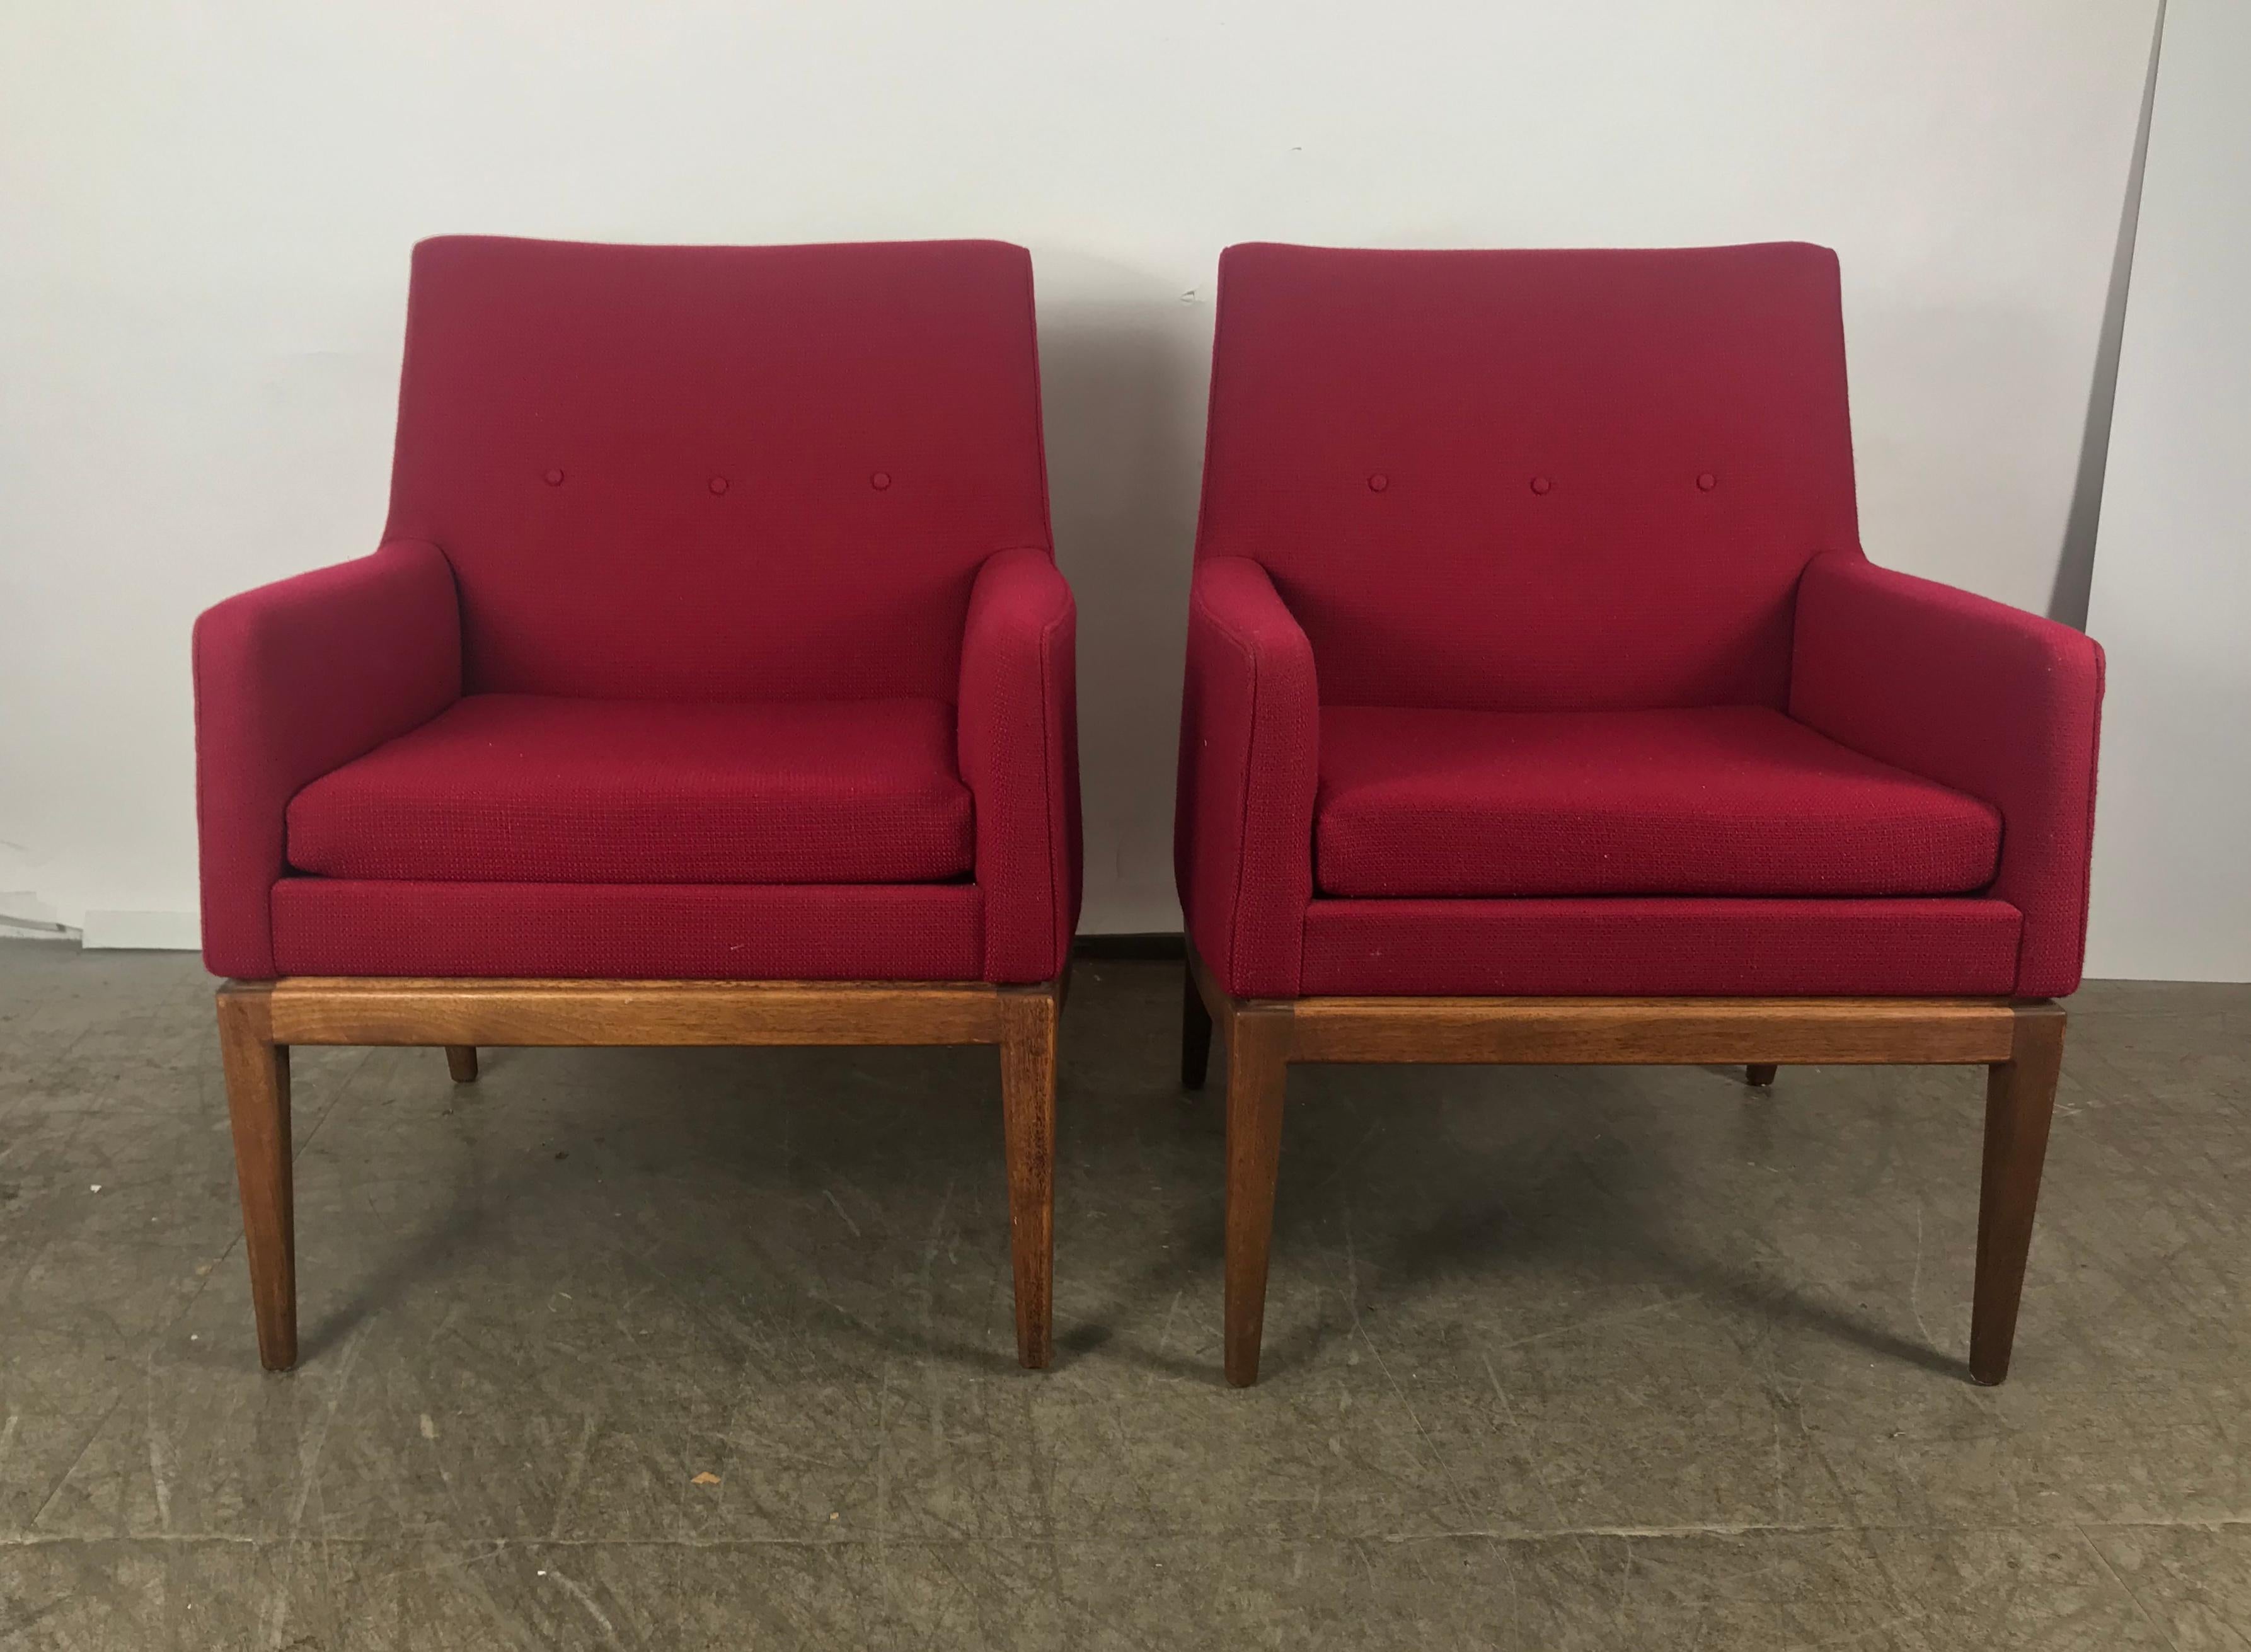 American Classic Modernist Lounge Chairs Designed by Jens Risom, Jens Risom Design Inc